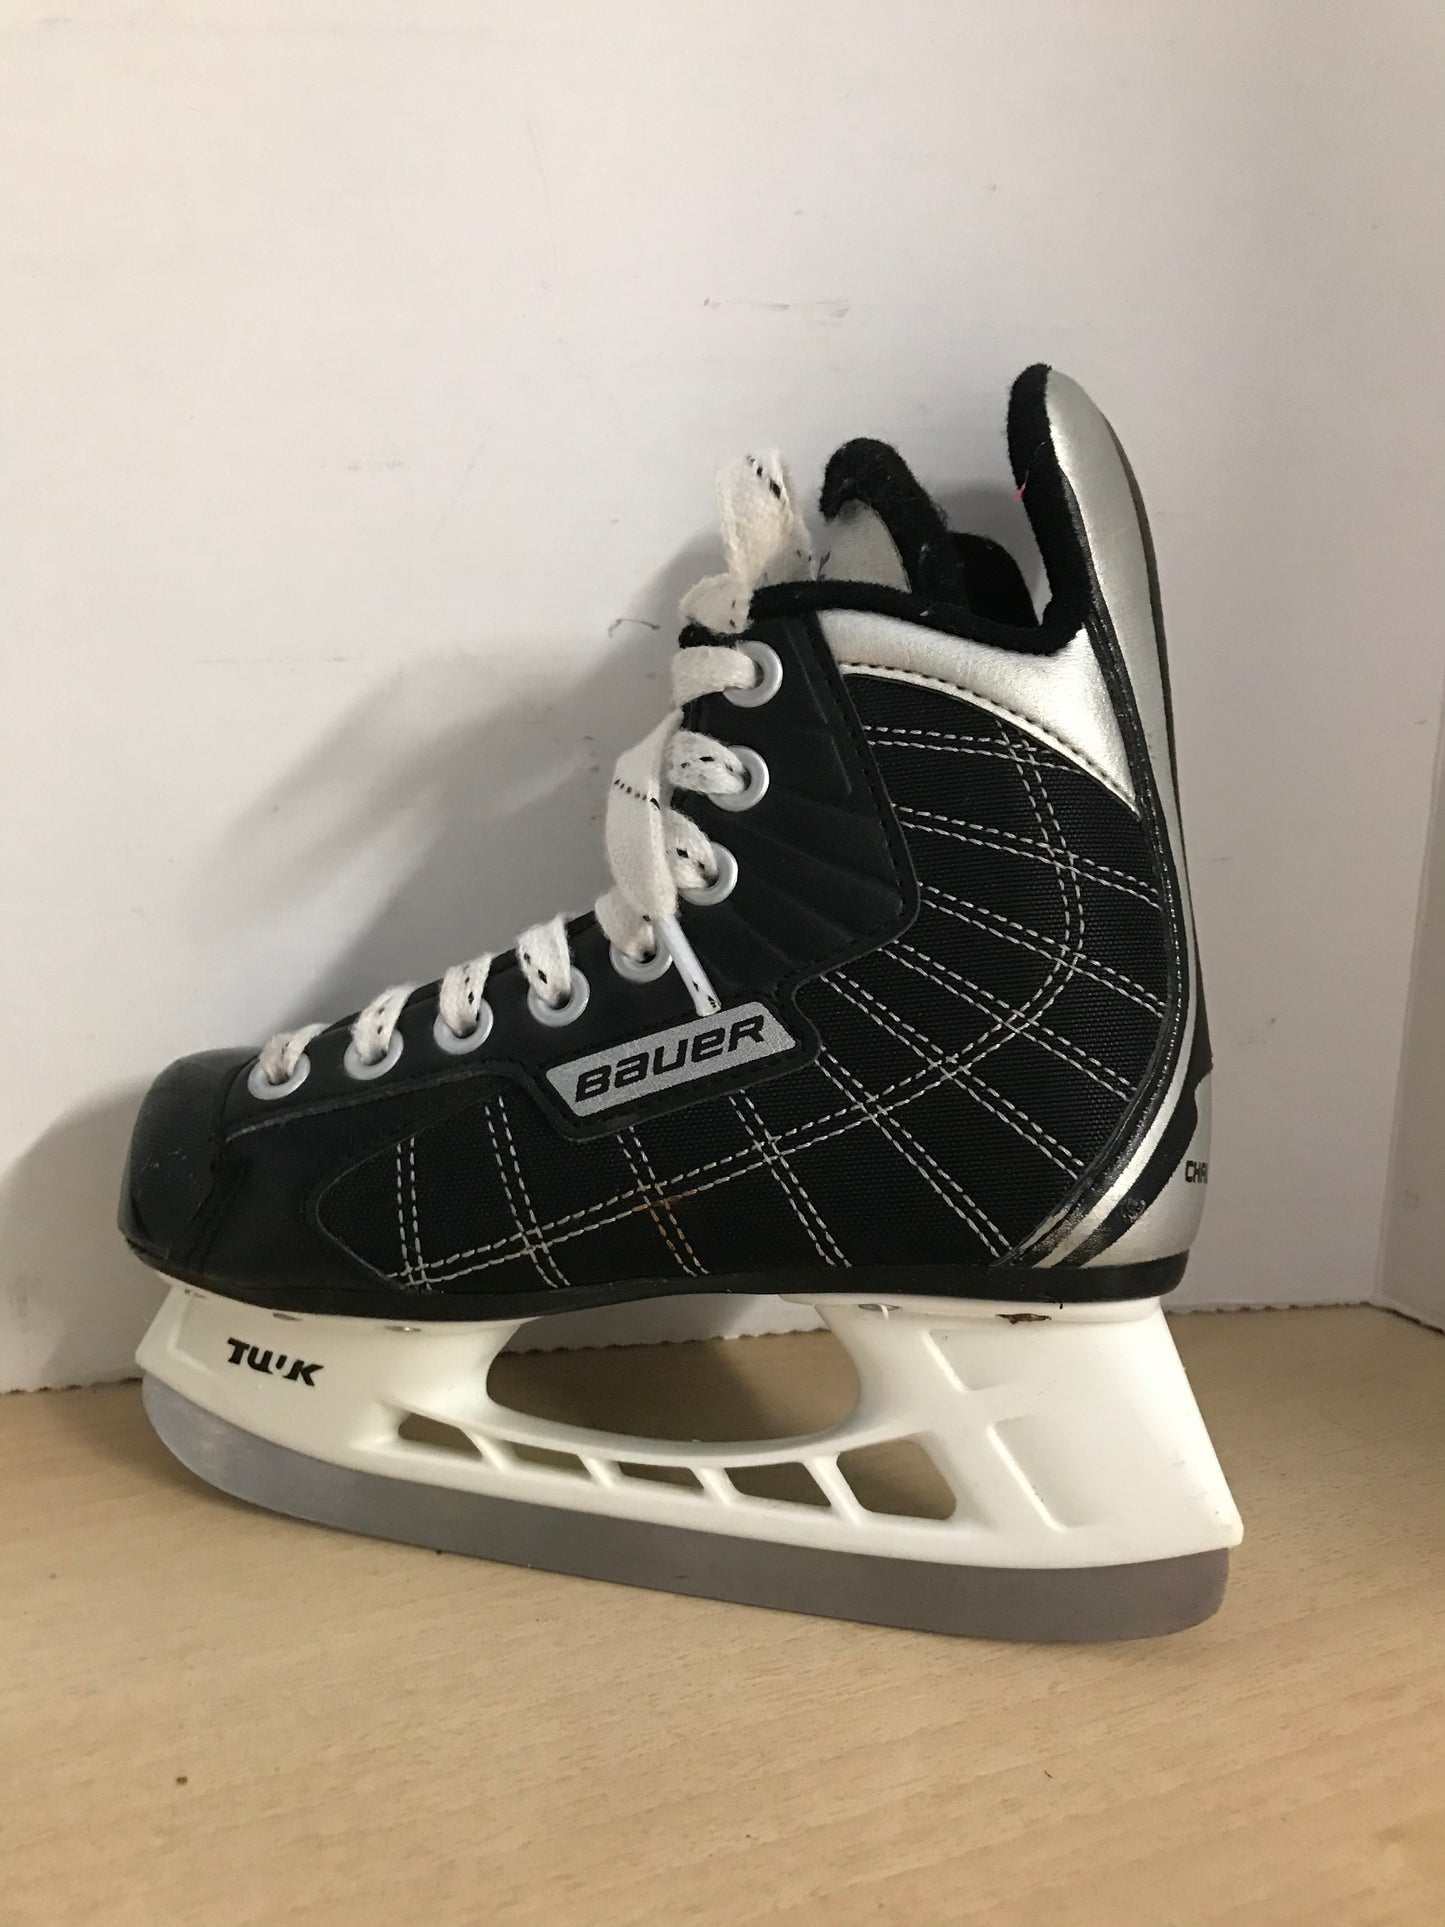 Hockey Skates Child Size 13 Shoe Size Bauer Challenger Excellent